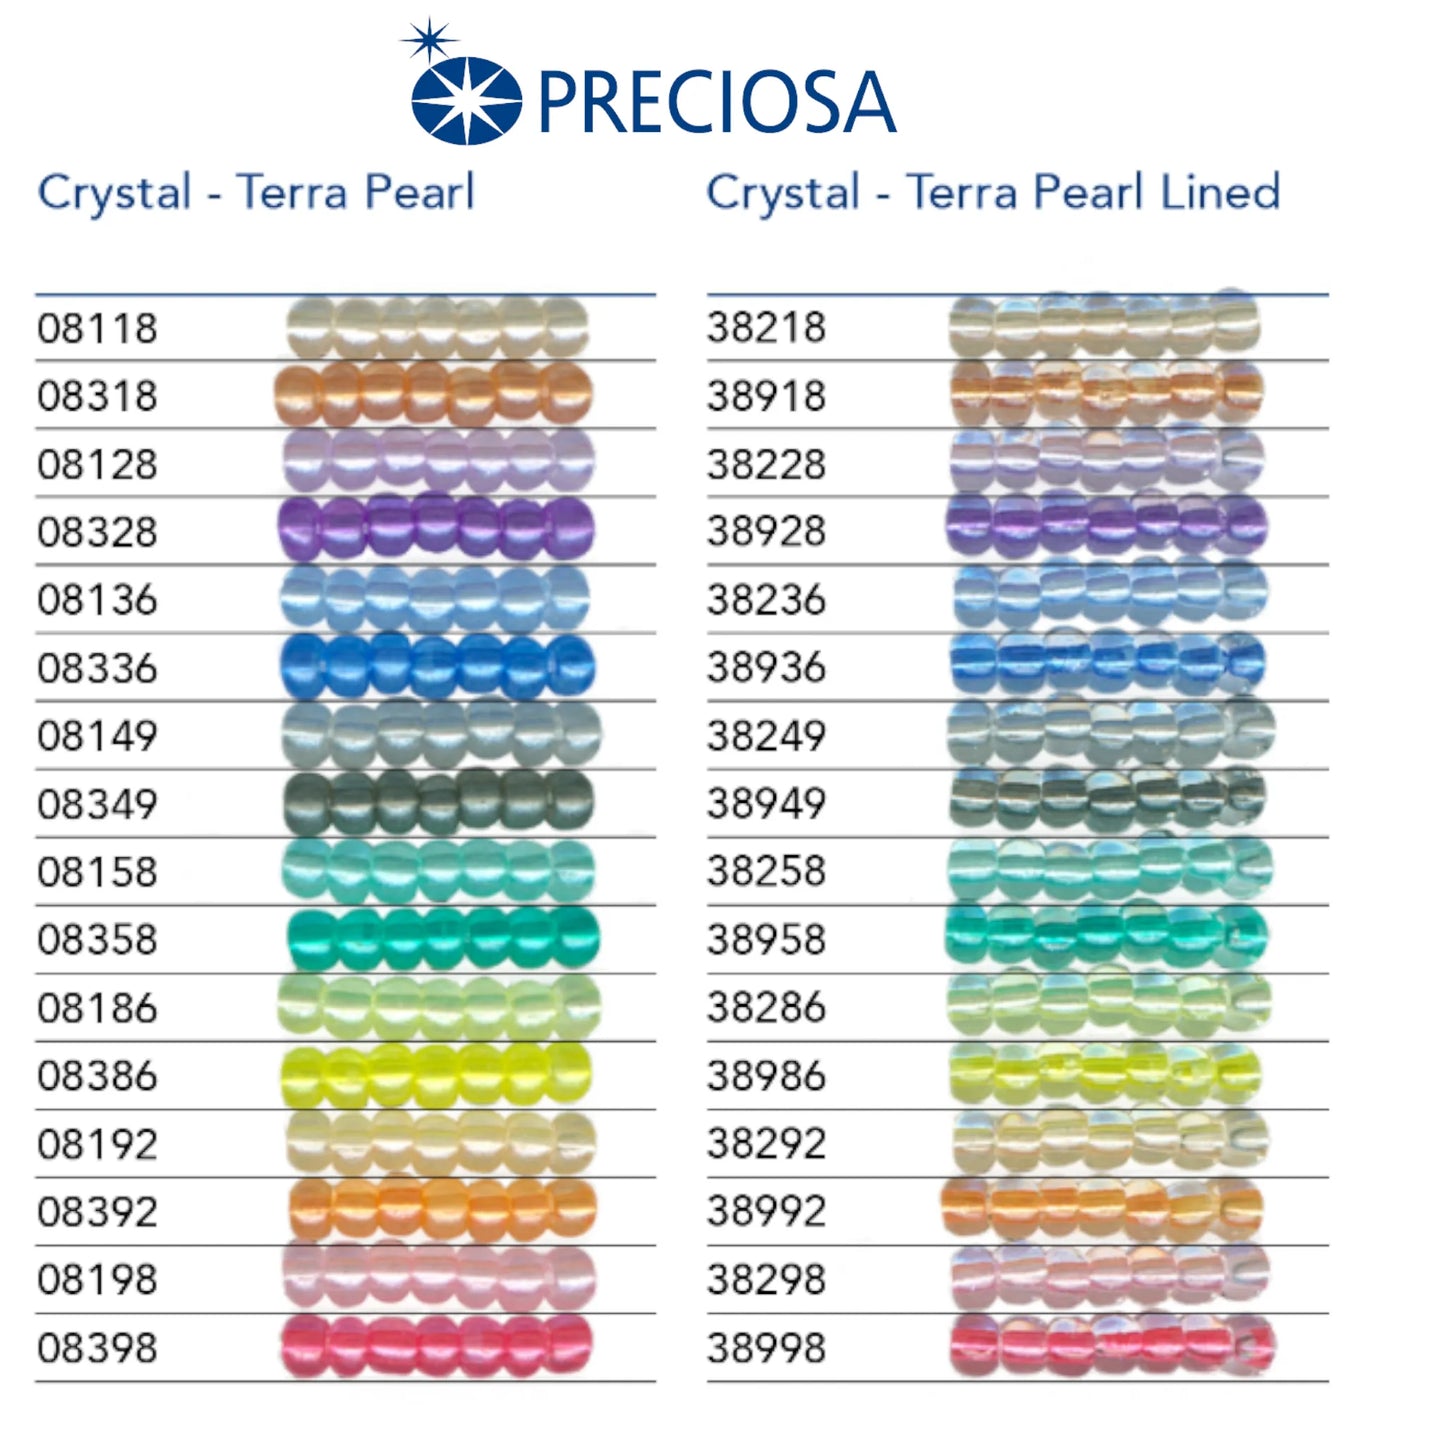 08358 Tschechische Rocailles PRECIOSA Rocailles 10/0 türkis. Kristall - Terra Pearl.